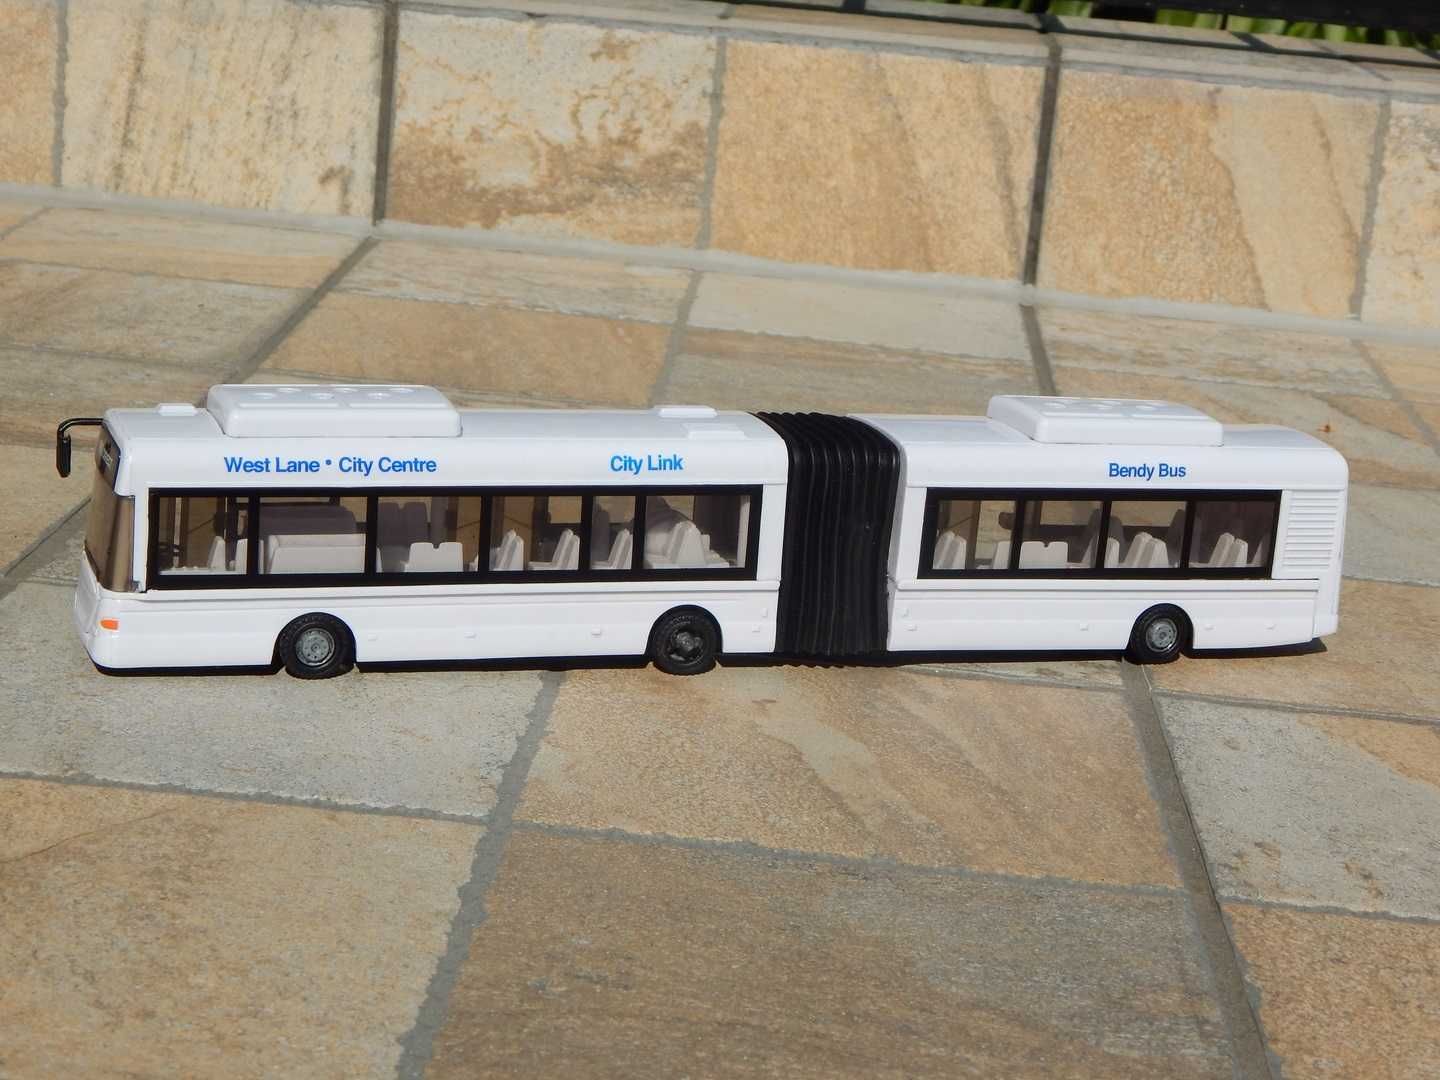 Macheta jucarie plastic autobuz articulat 40 cm lungime